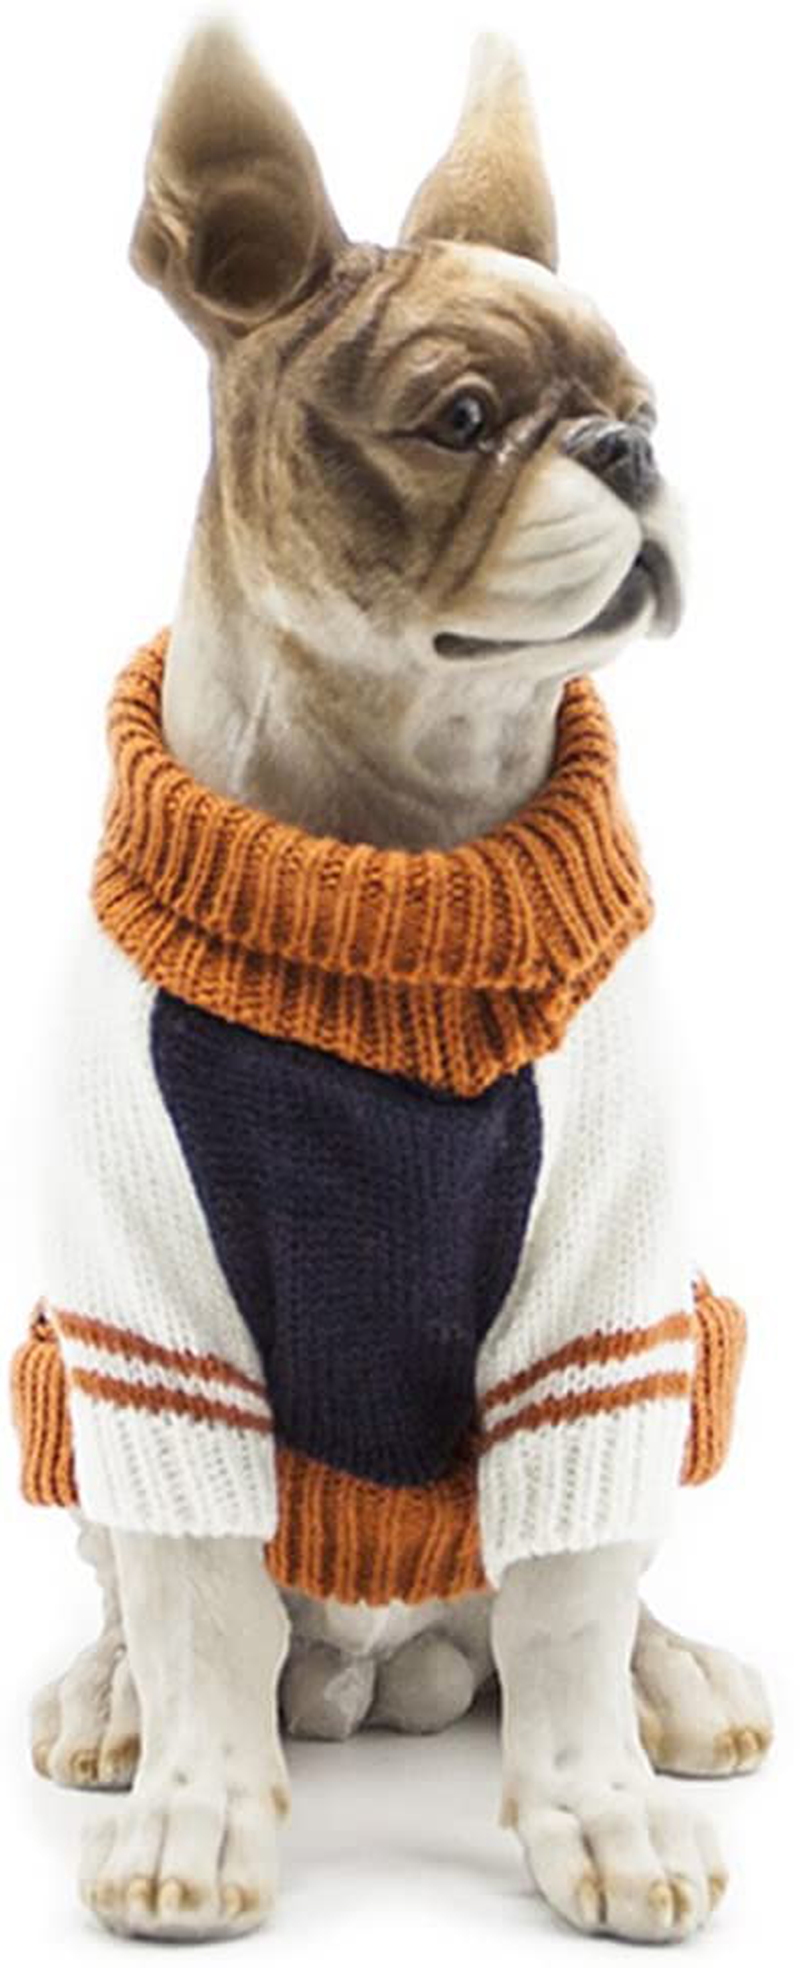 BOBIBI Dog Sweater of the Diamond Plaid Pet Cat Winter Knitwear Warm Clothes,Orange,Small Animals & Pet Supplies > Pet Supplies > Cat Supplies > Cat Apparel BOBIBI   